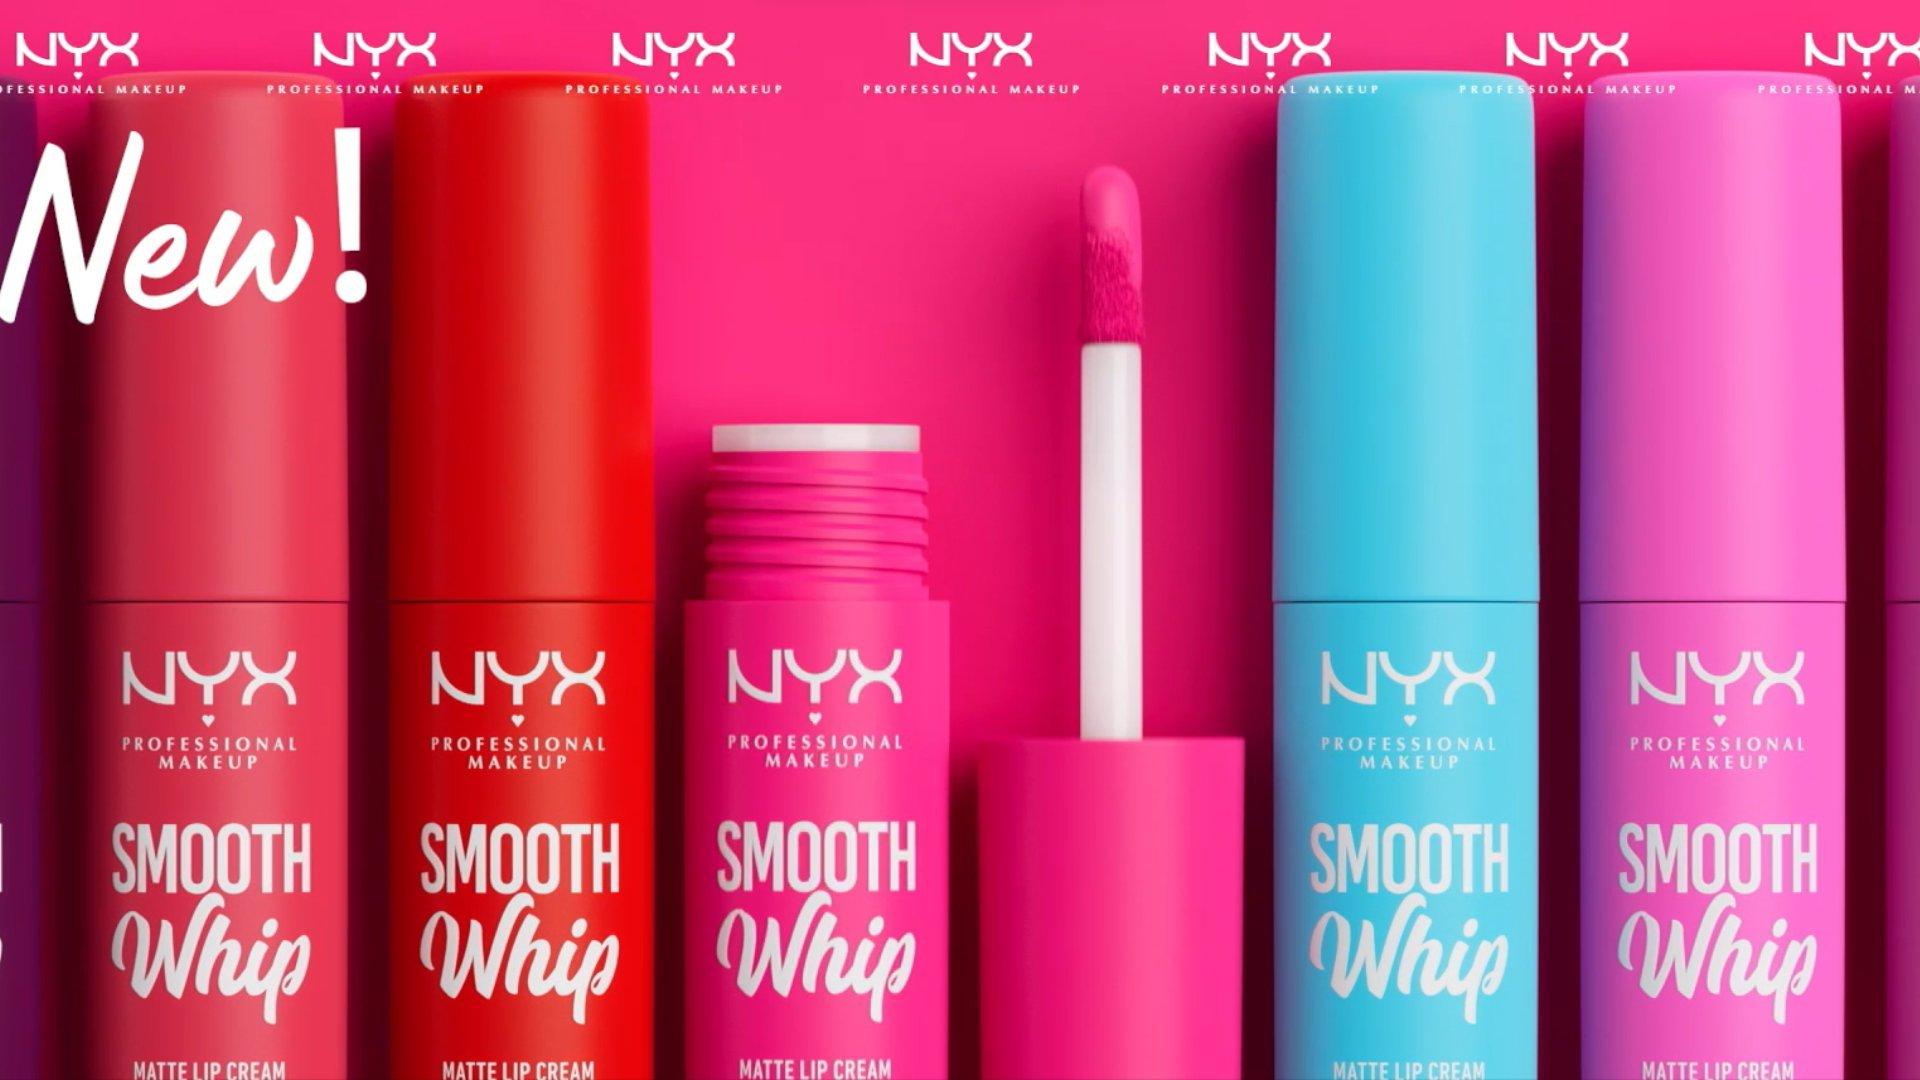 Smooth Whip Blurring Matte Lip Cream - NYX Professional Makeup